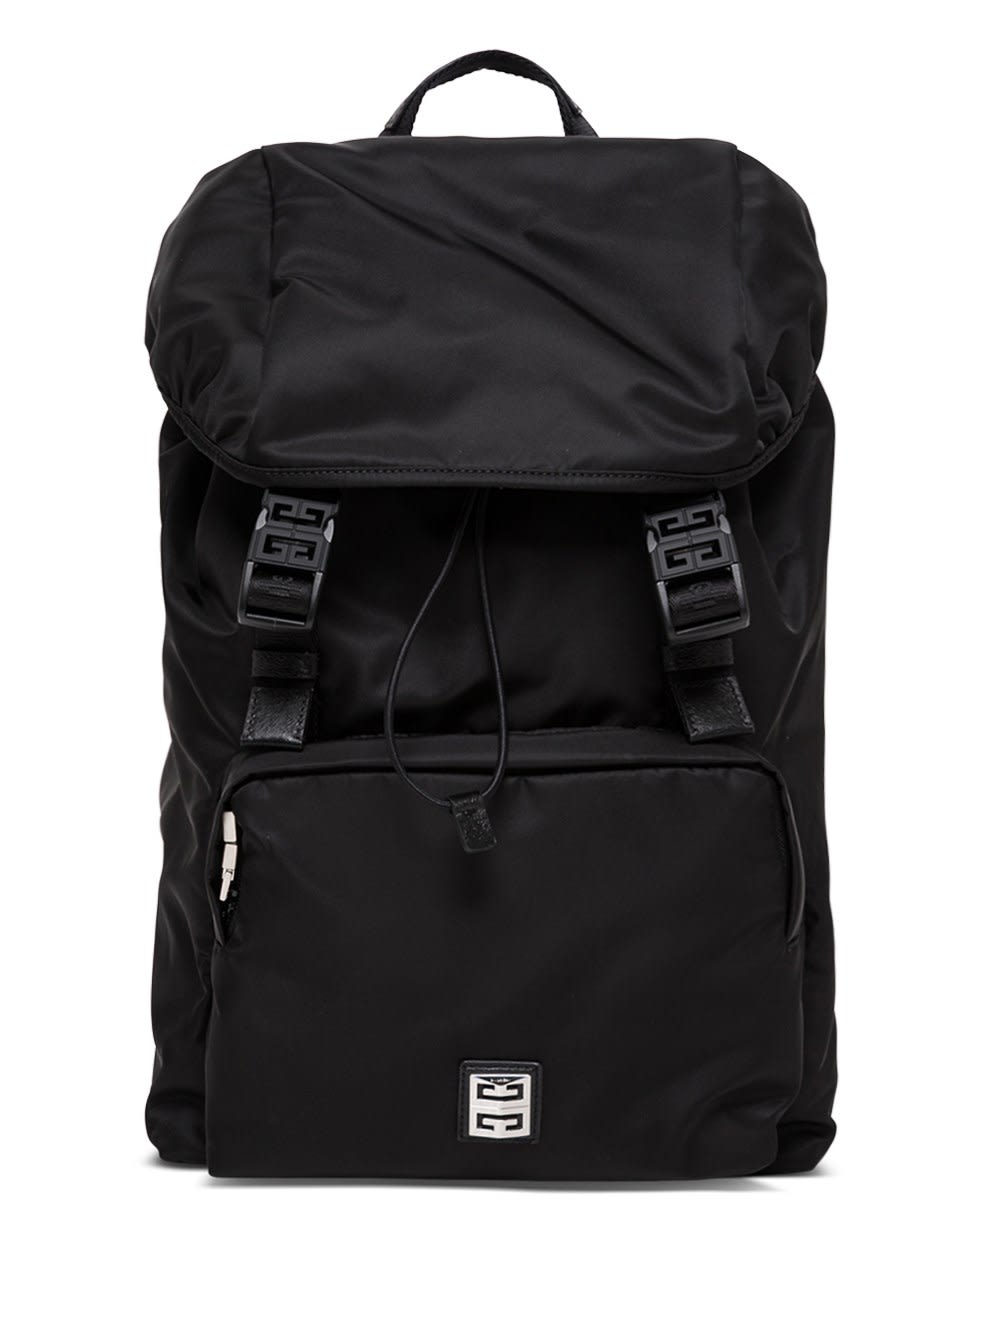 Givenchy 4g Light Black Nylon Backpack